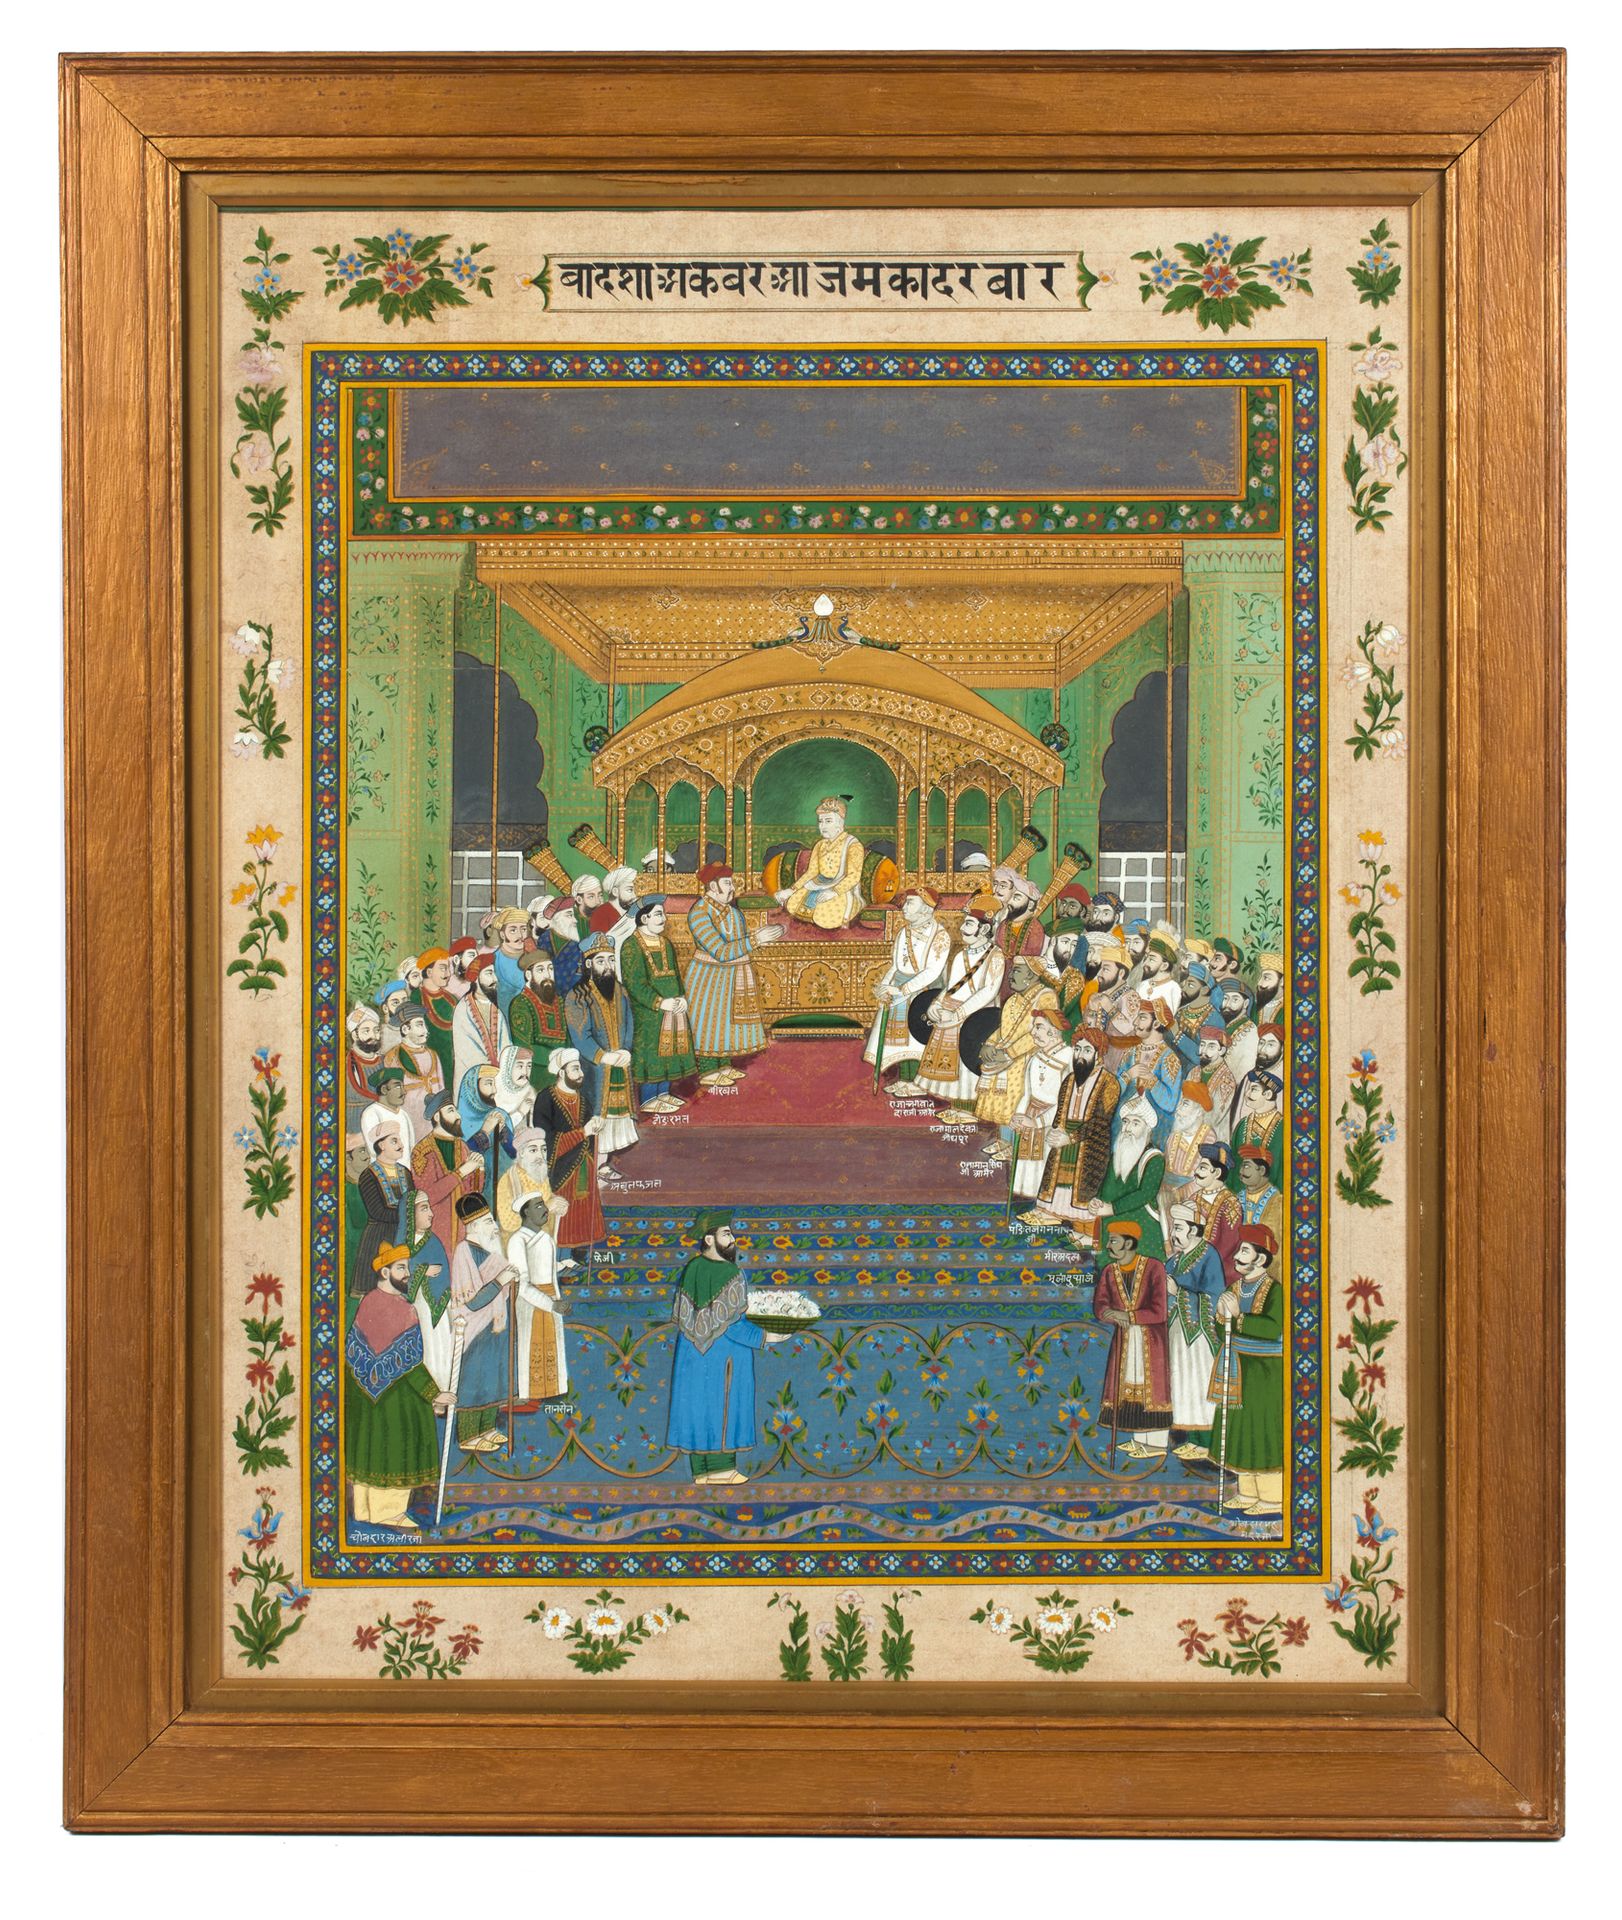 La cour de l'empereur Akbar 
阿克巴皇帝的宫廷




印度，德里，约1900年




大型构图，水粉画在纸板页上，复制了阿克巴皇&hellip;